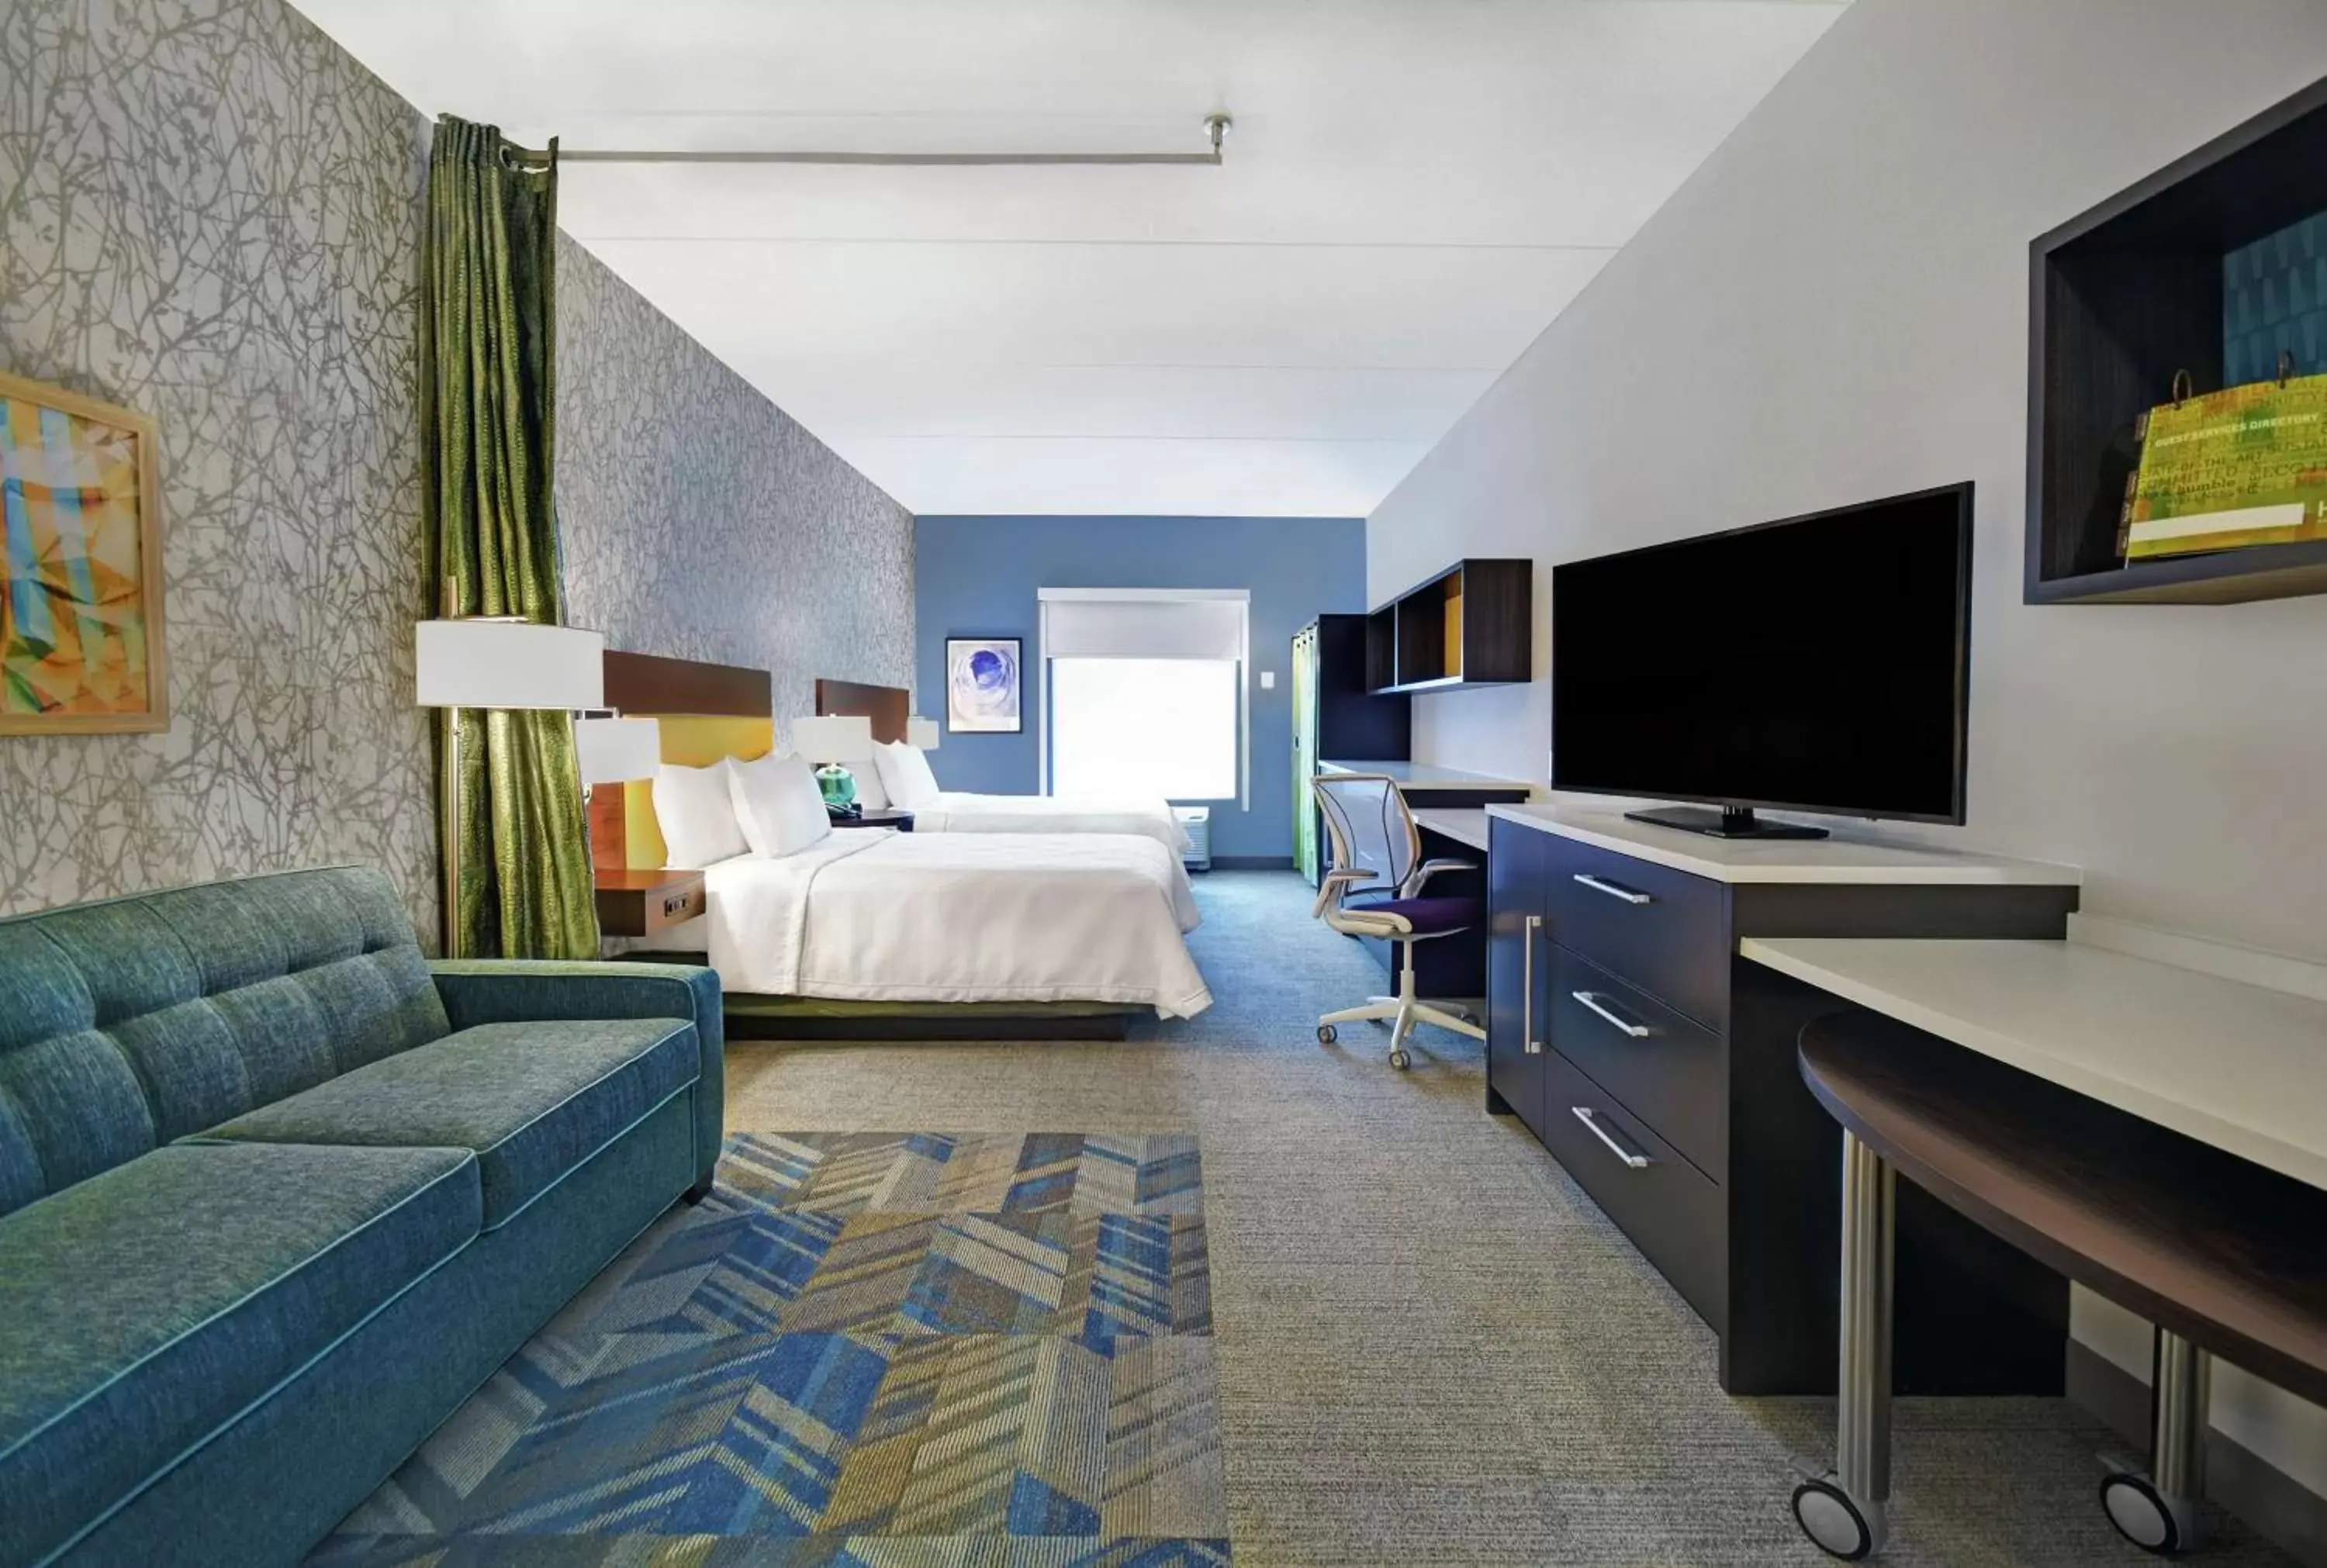 Bedroom, Seating Area in Home2 Suites By Hilton Lawrenceville Atlanta Sugarloaf, Ga